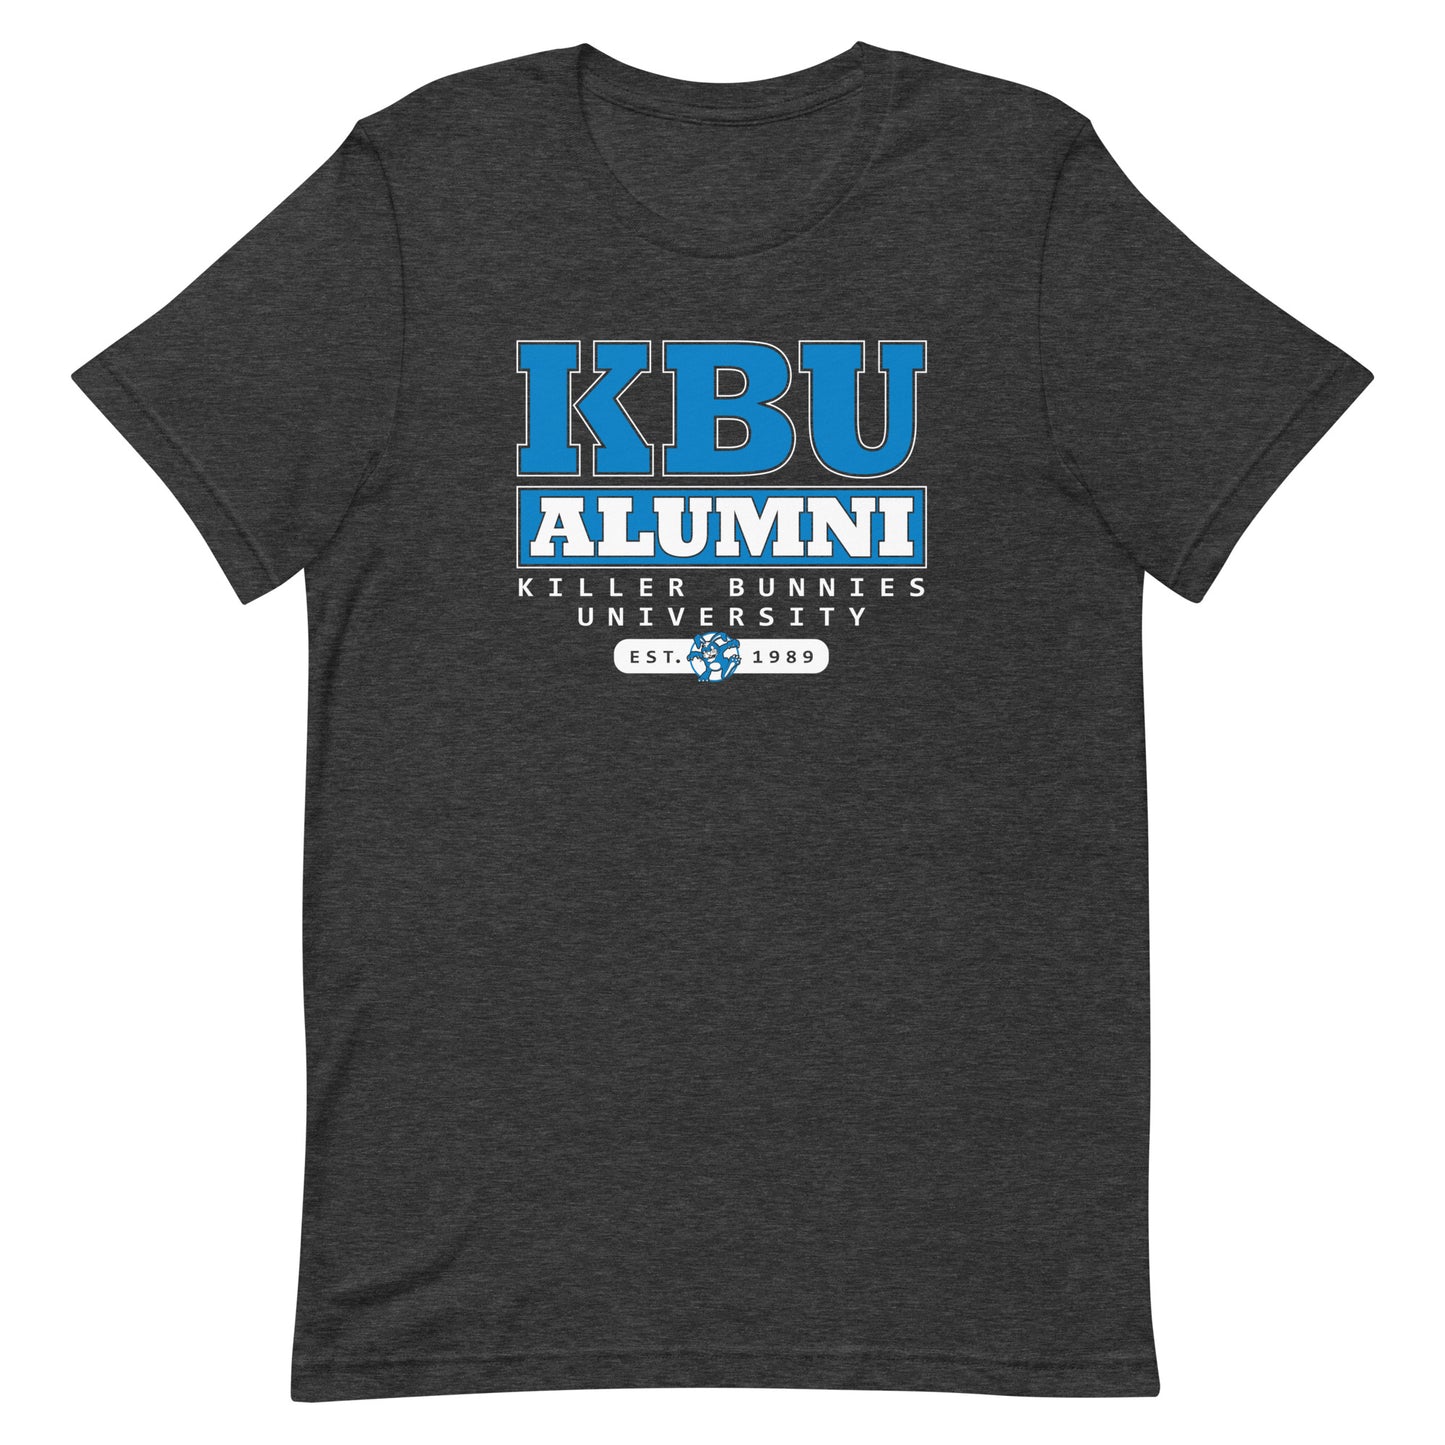 Killer Bunnies Alumni Unisex T-Shirt - Dark Grey Heather